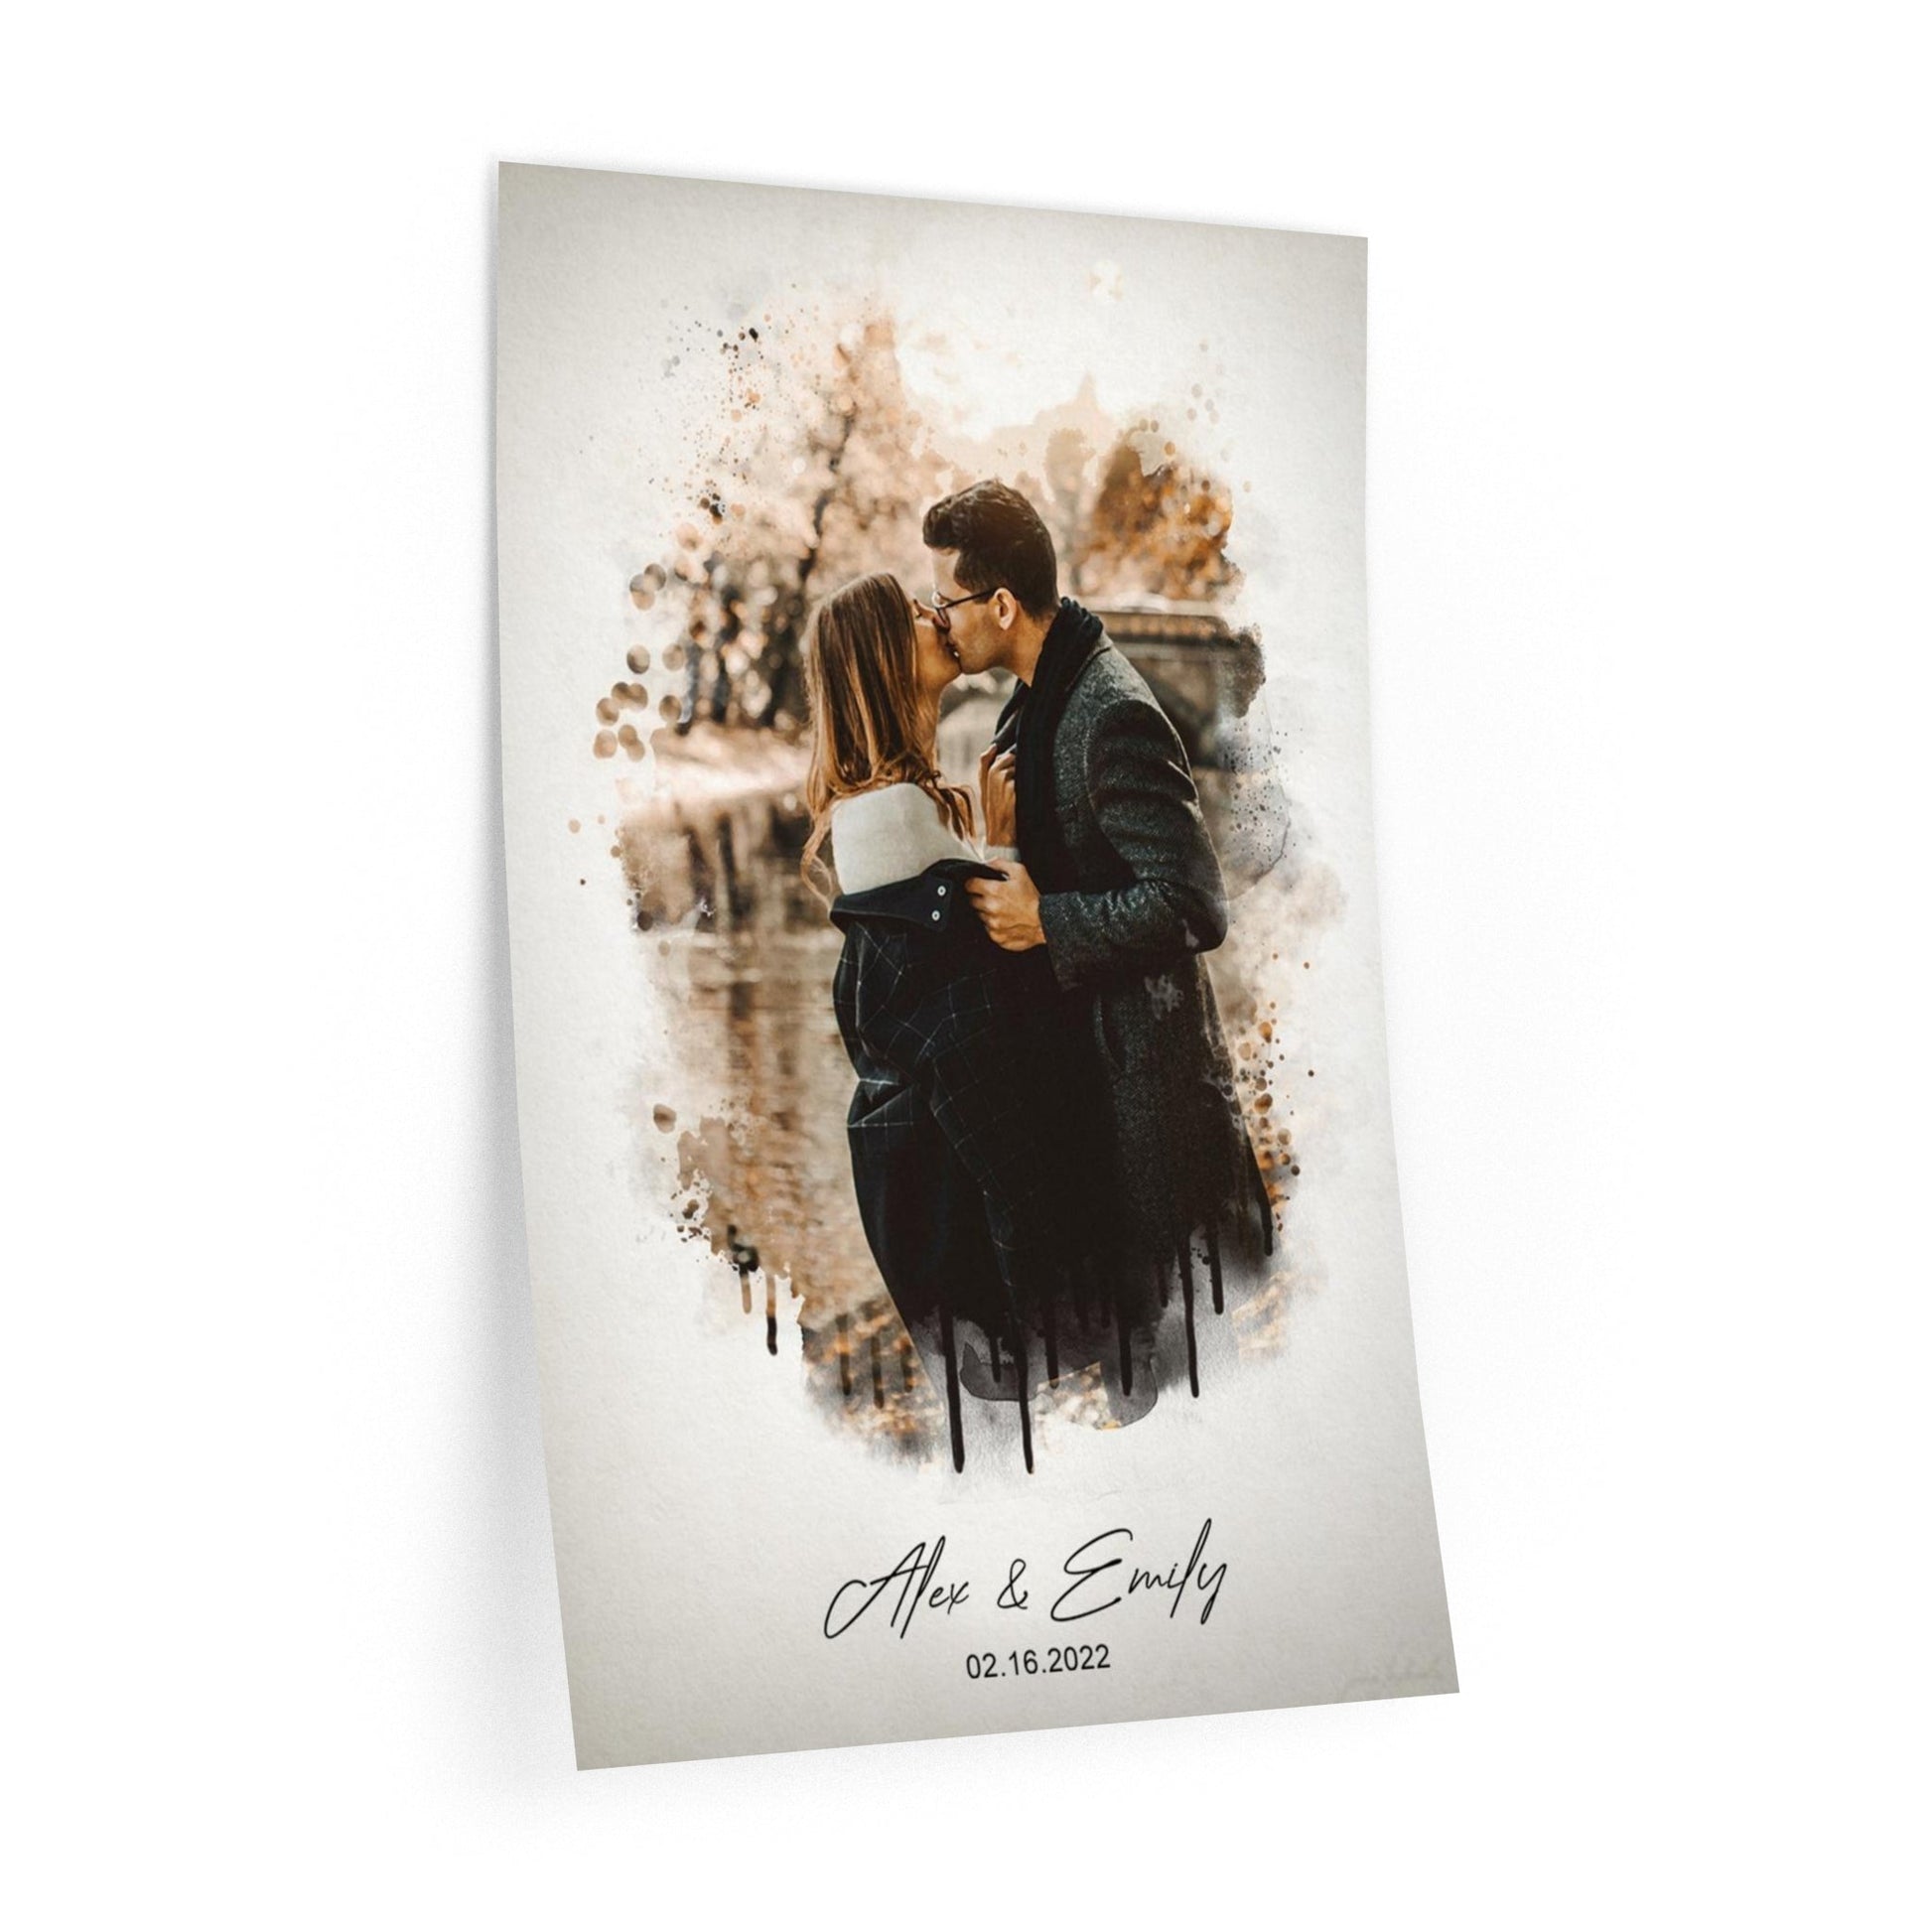 Stitched canvas gift: Loving couple's heartfelt portrait.